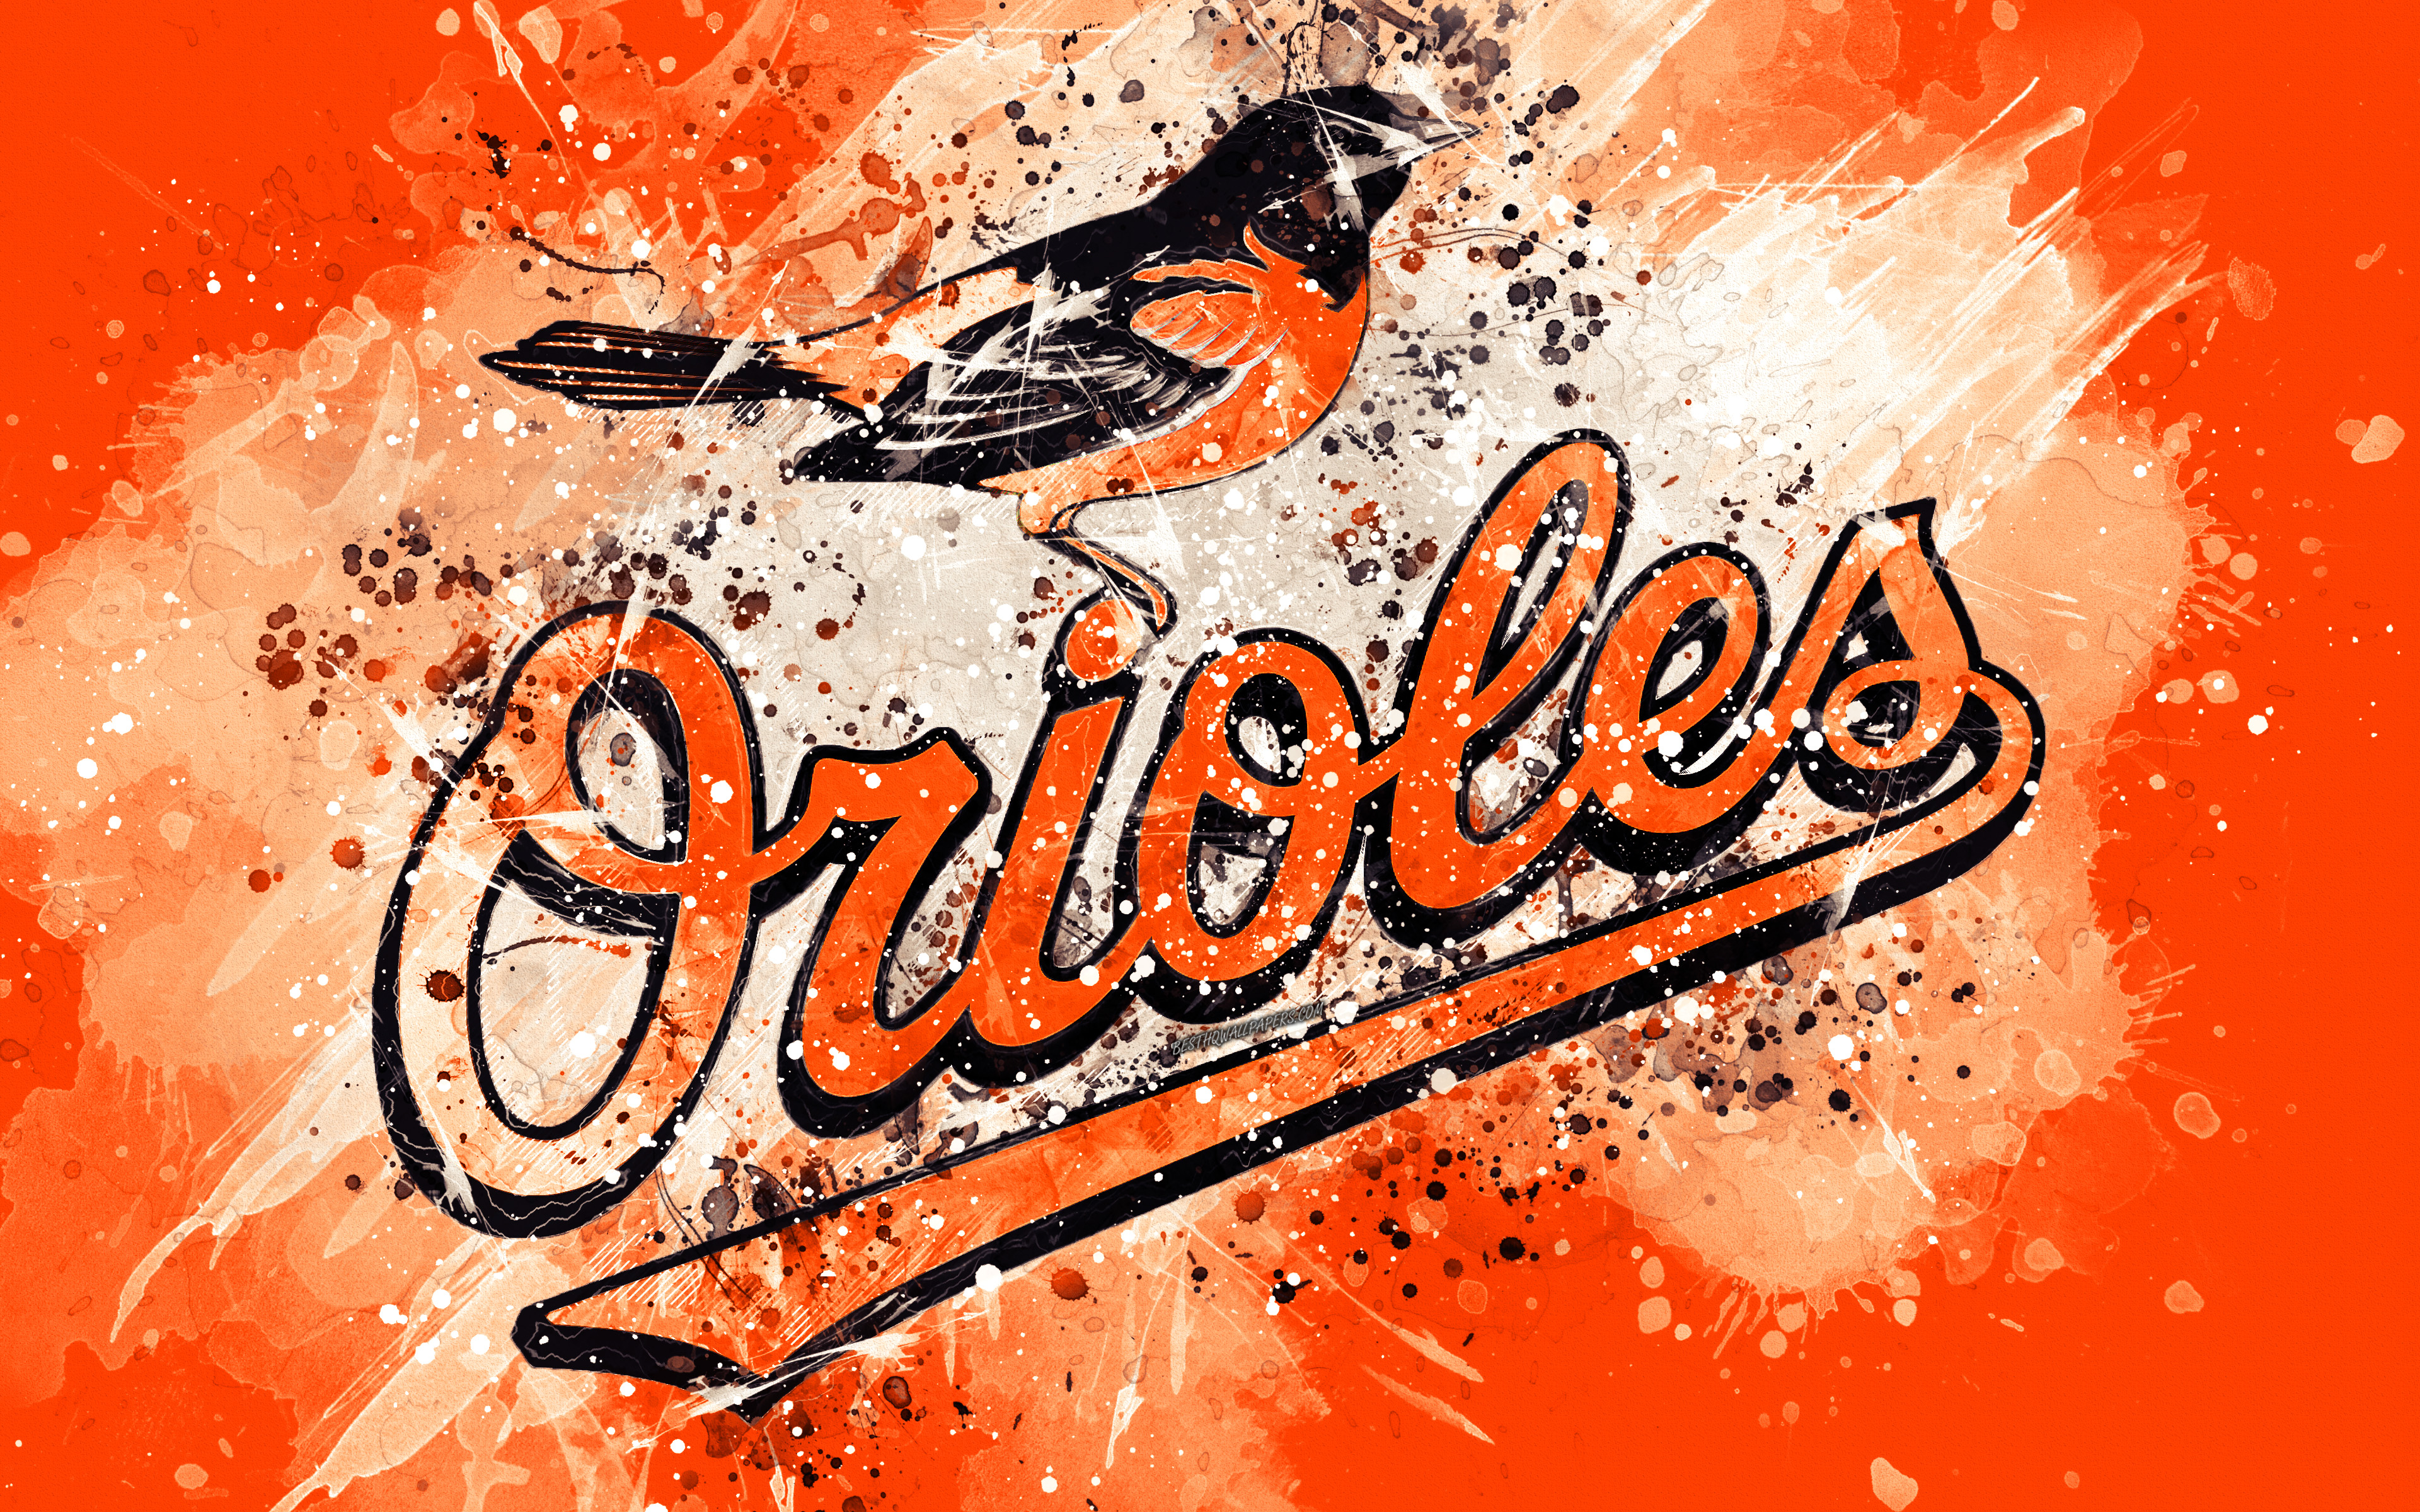 Baltimore Orioles 2019 Wallpapers - Wallpaper Cave